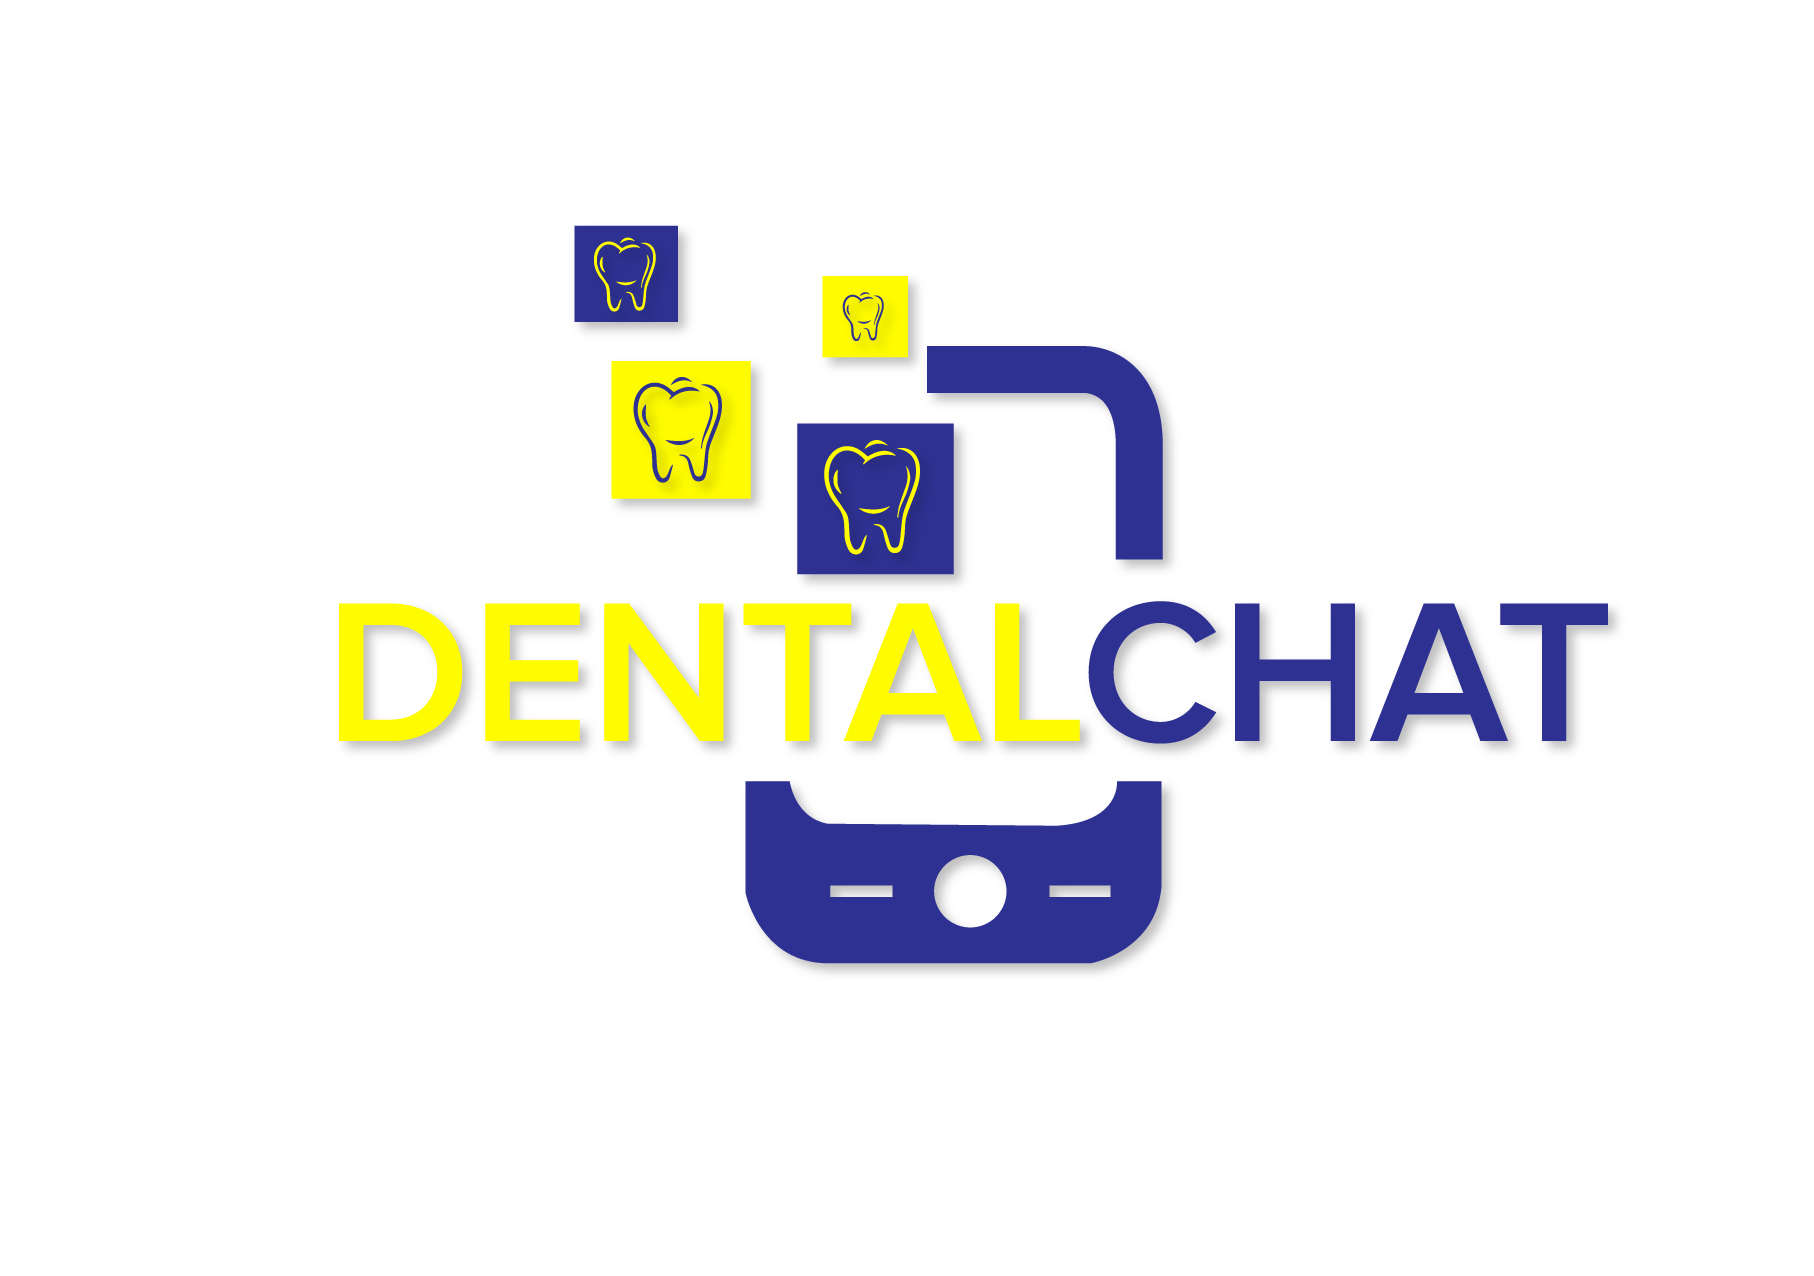 Dental chat